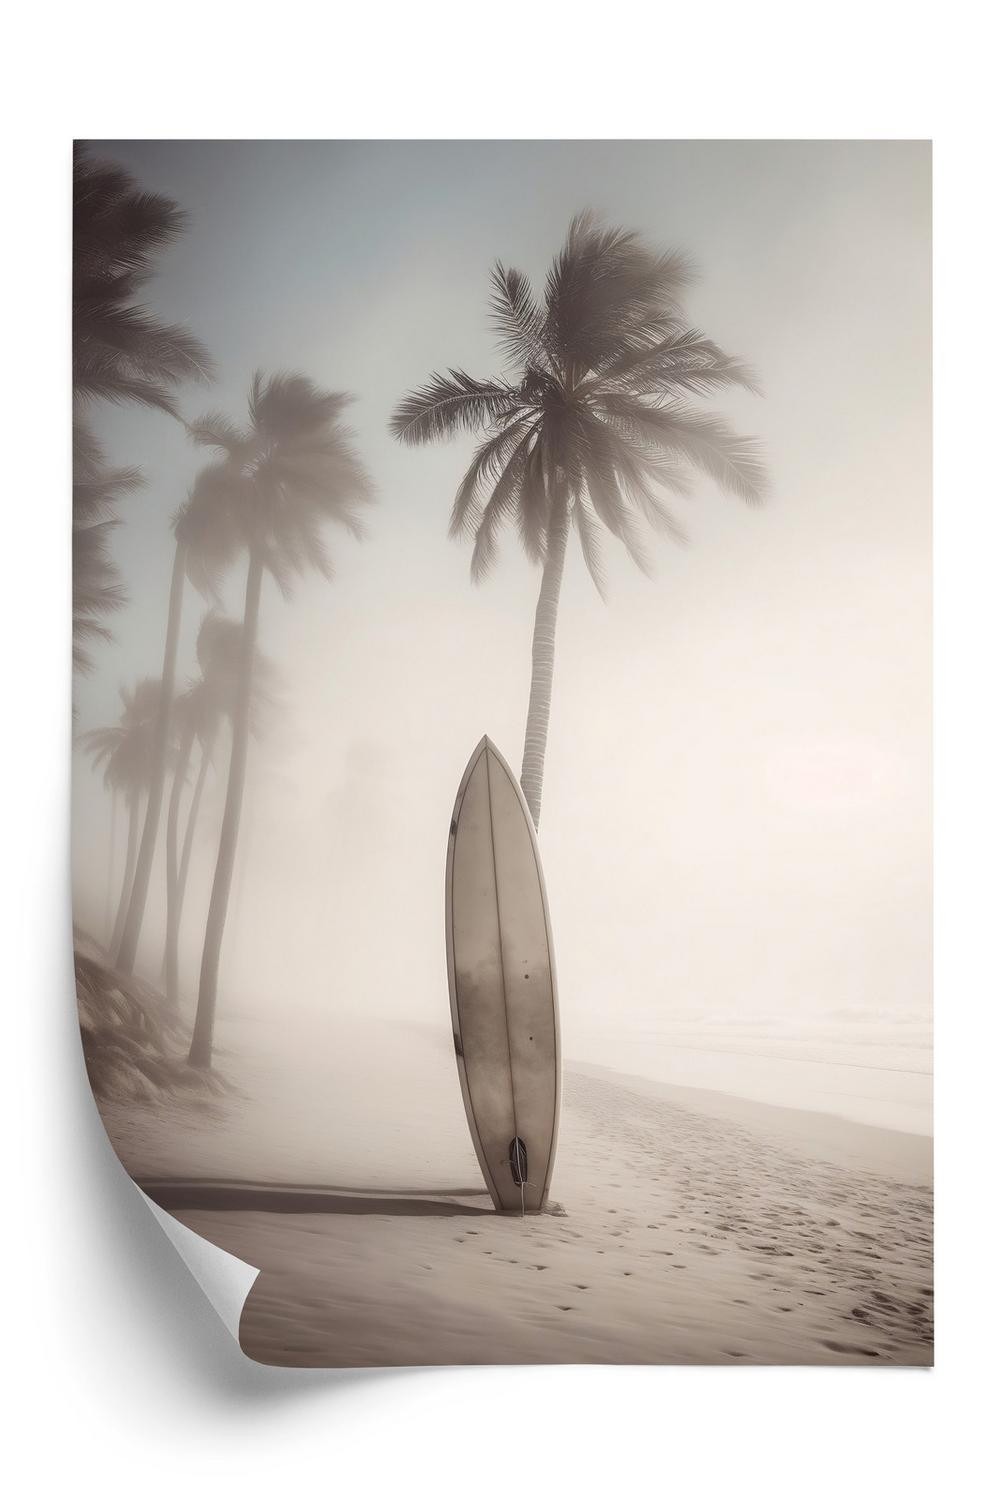 Plakat - Surfbræt på stranden med palmer